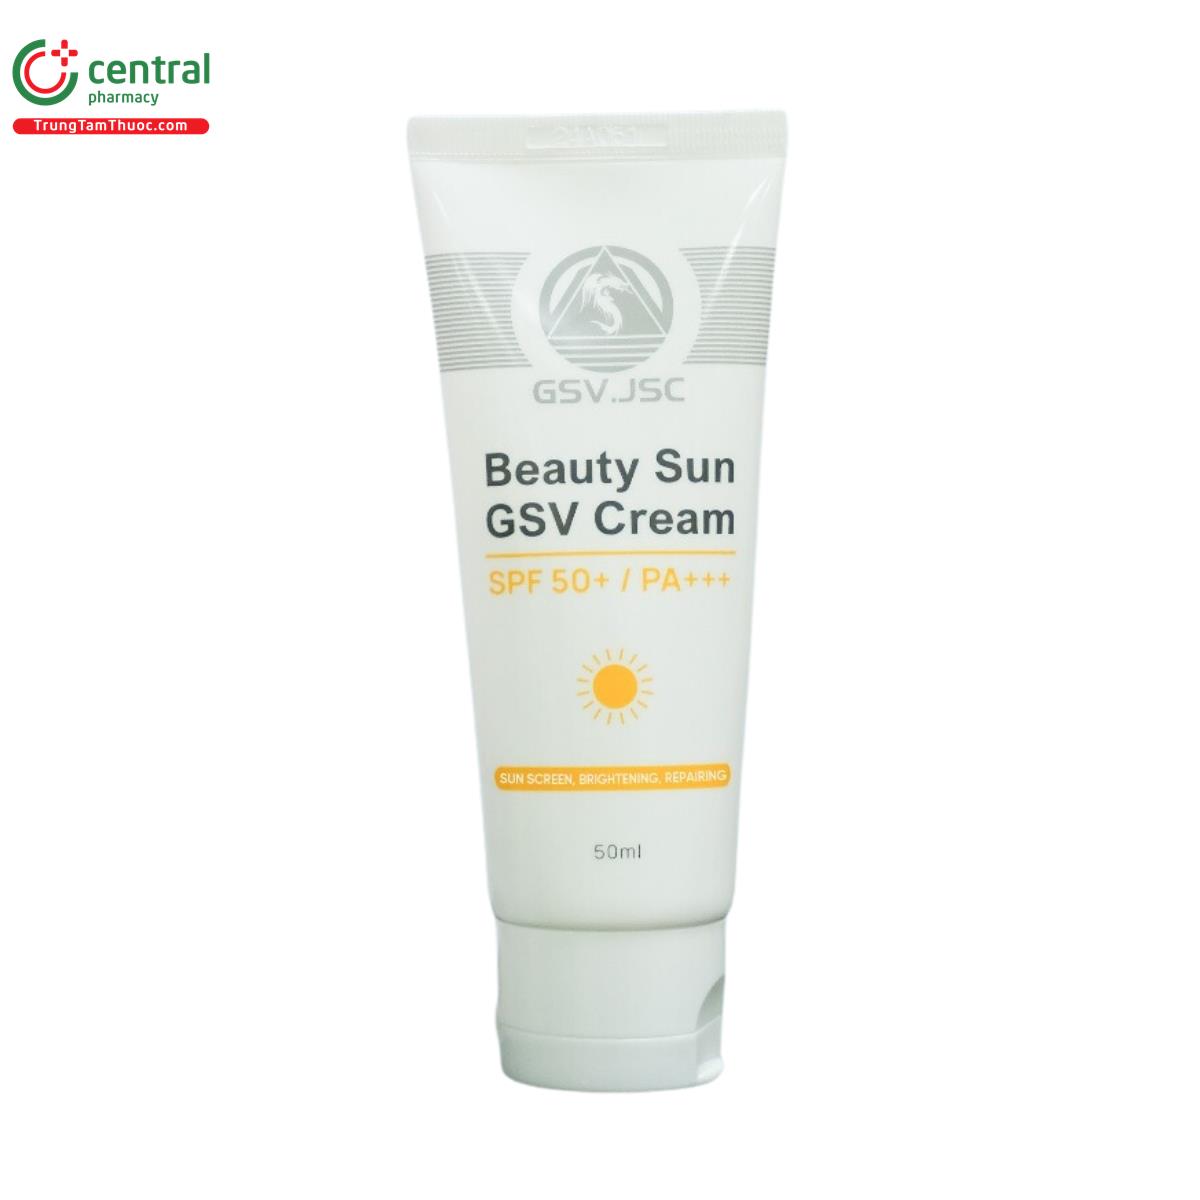 beauty sun gsv cream 3 I3103